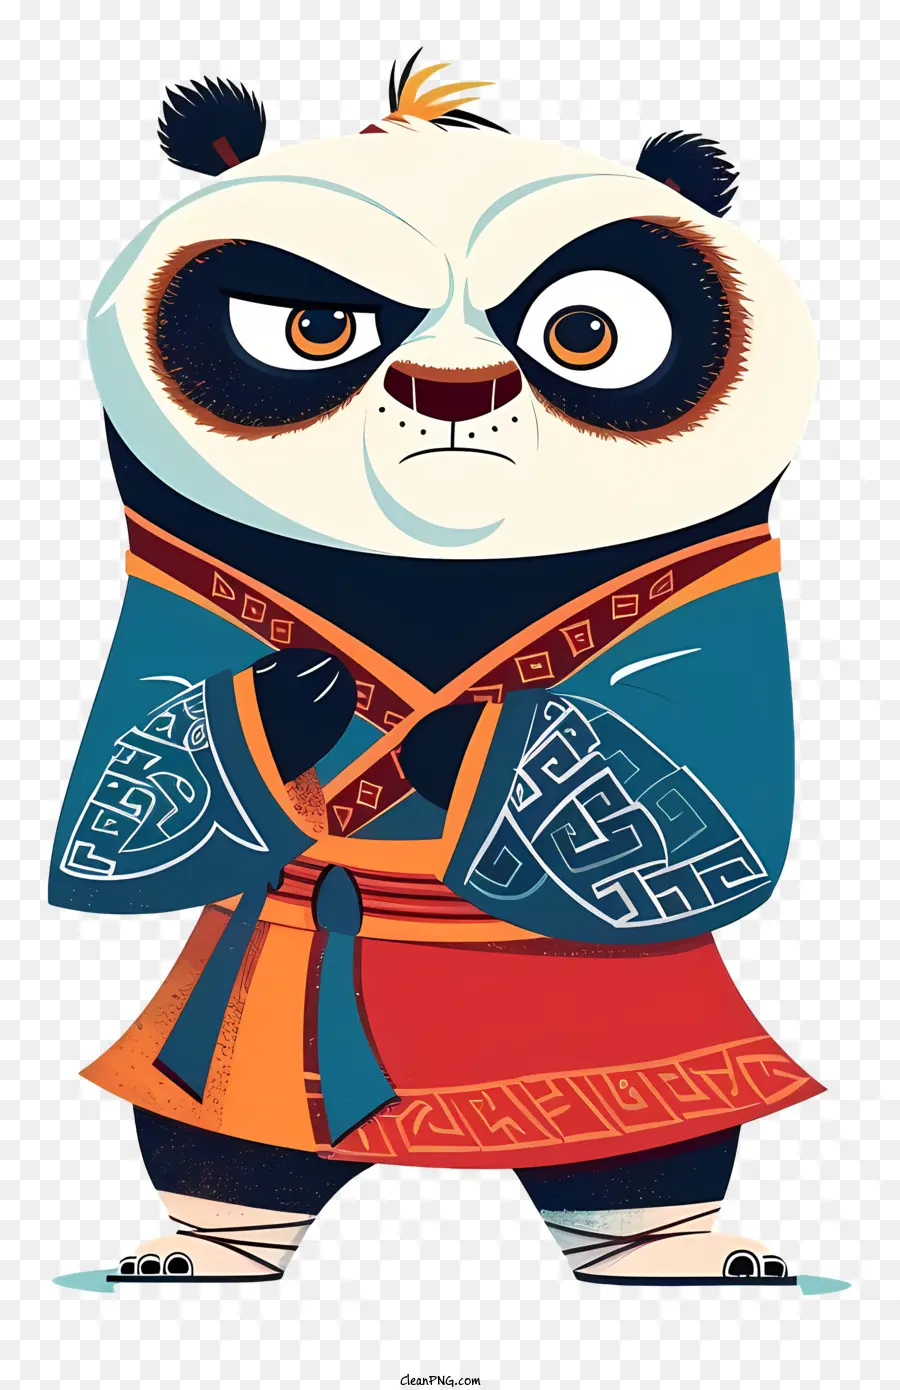 Kung Fu Panda Cartoon Cartoon Panda Red Robe Blue Hat Armi - Panda dei cartoni animati in veste rossa tiene armi